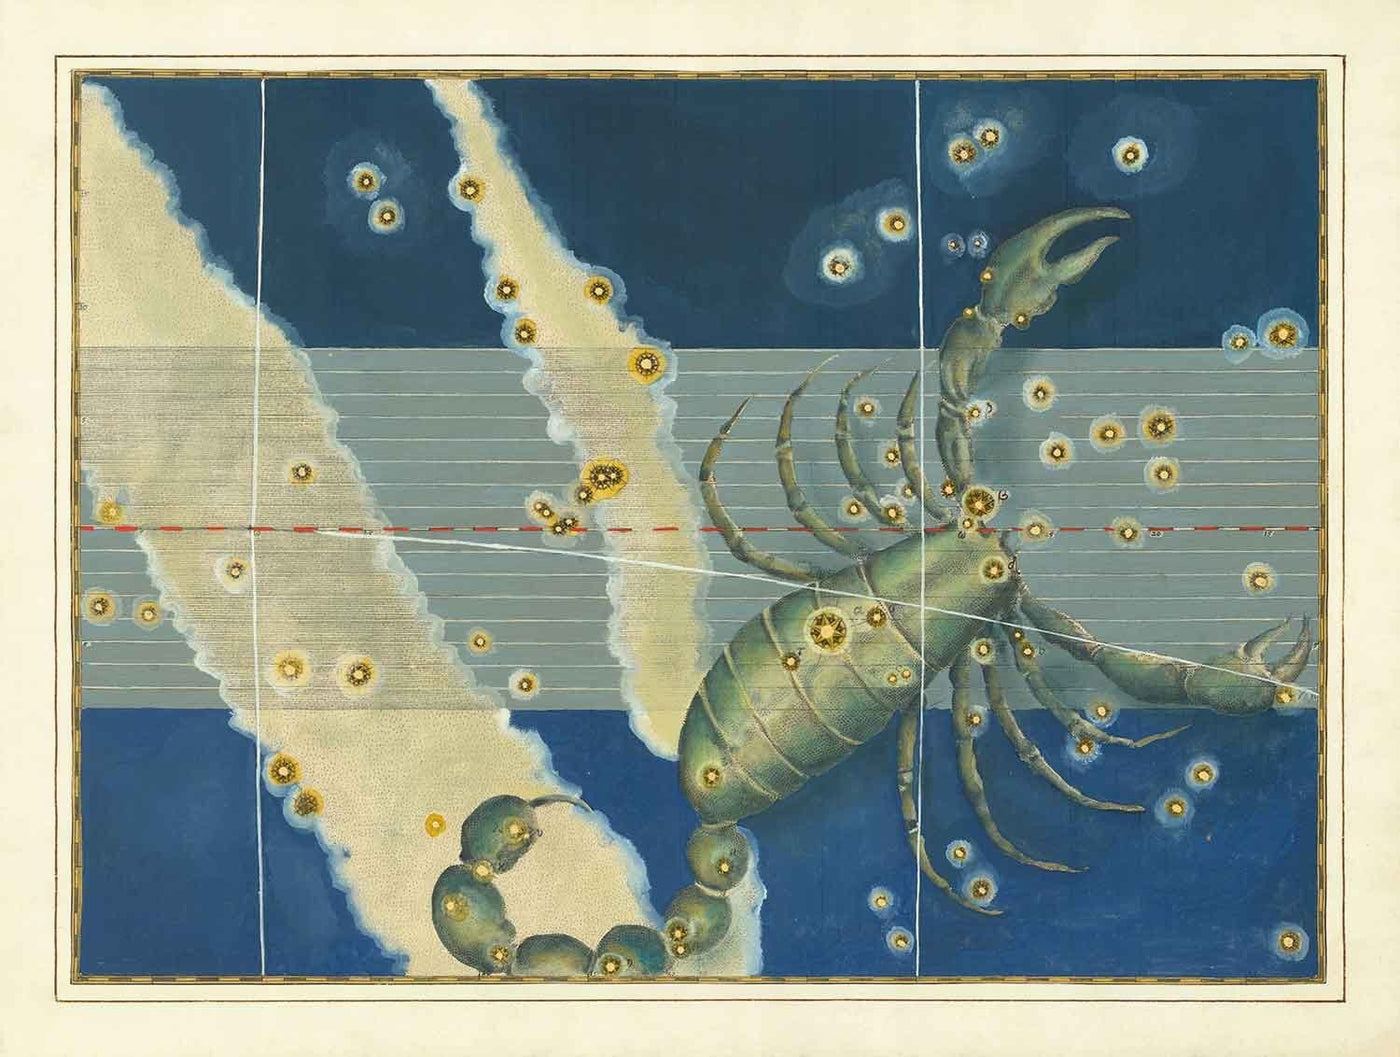 Old Star Map of Scorpio, 1603 by Johann Bayer - Zodiac Astrology Chart - The Scorpion Horoscope Sign